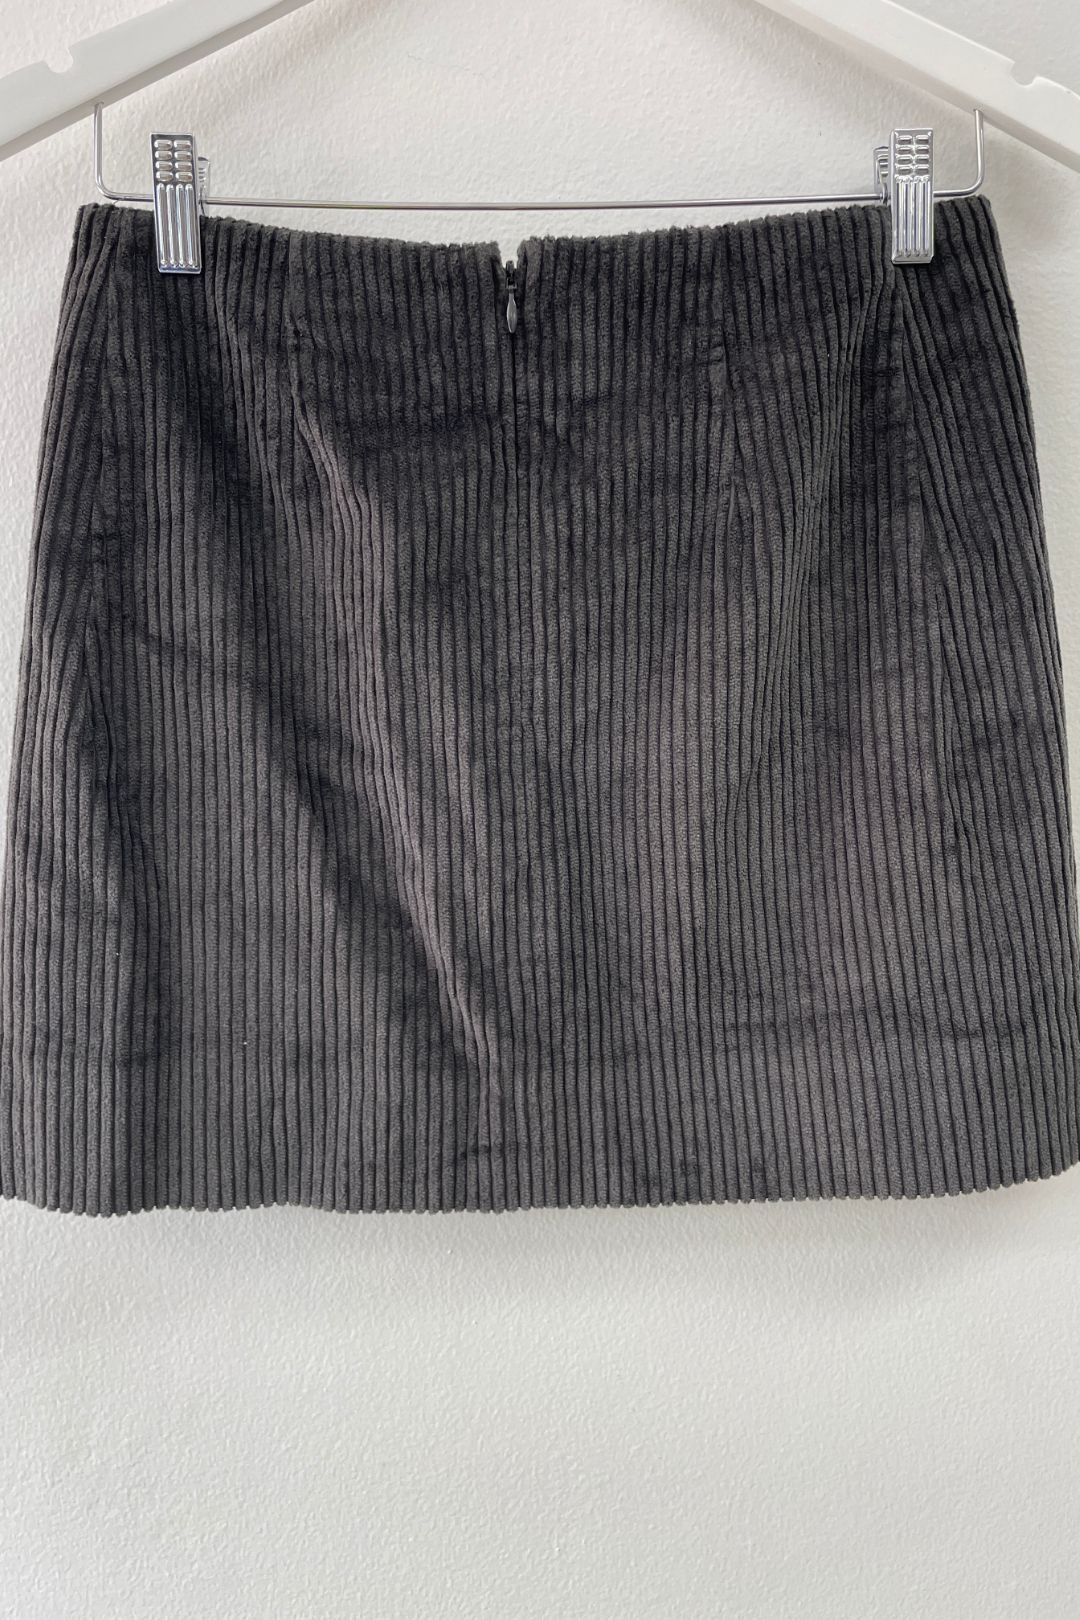 COS - Corduroy Black Mini Skirt